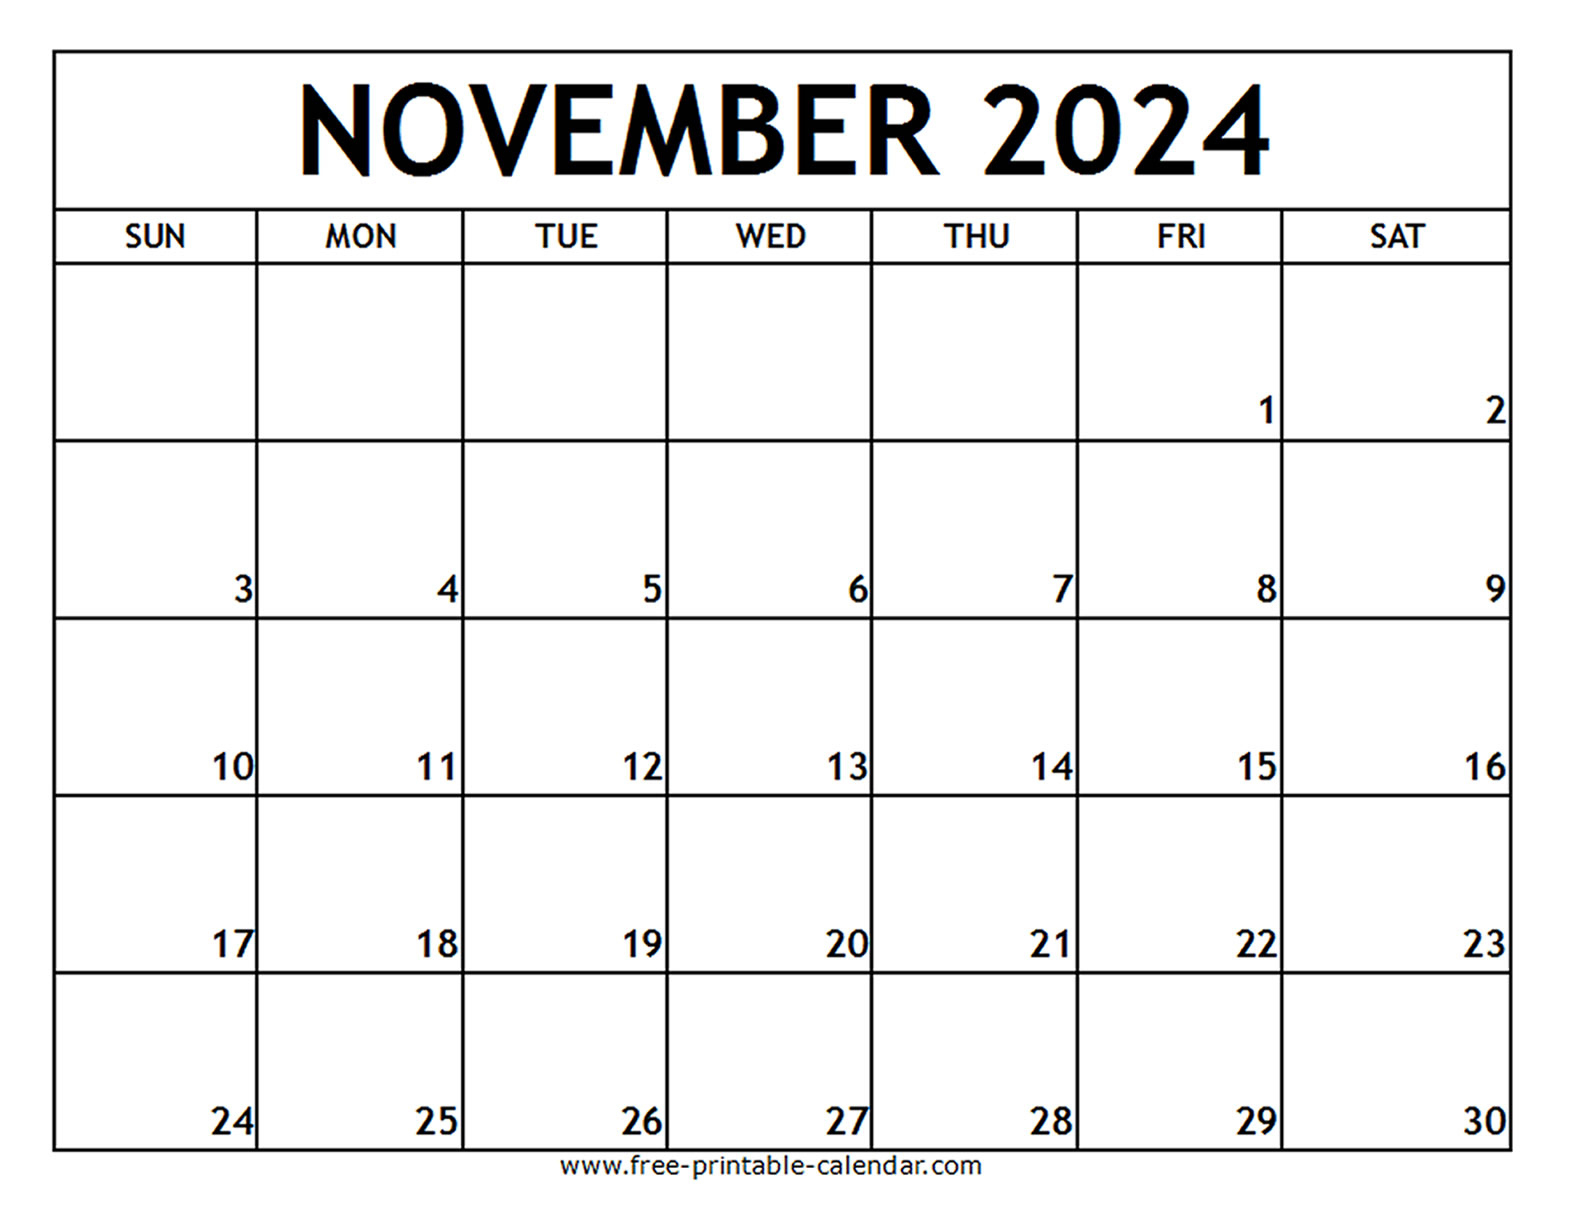 November 2024 Printable Calendar - Free-Printable-Calendar | Printable Calendar Nov 2024